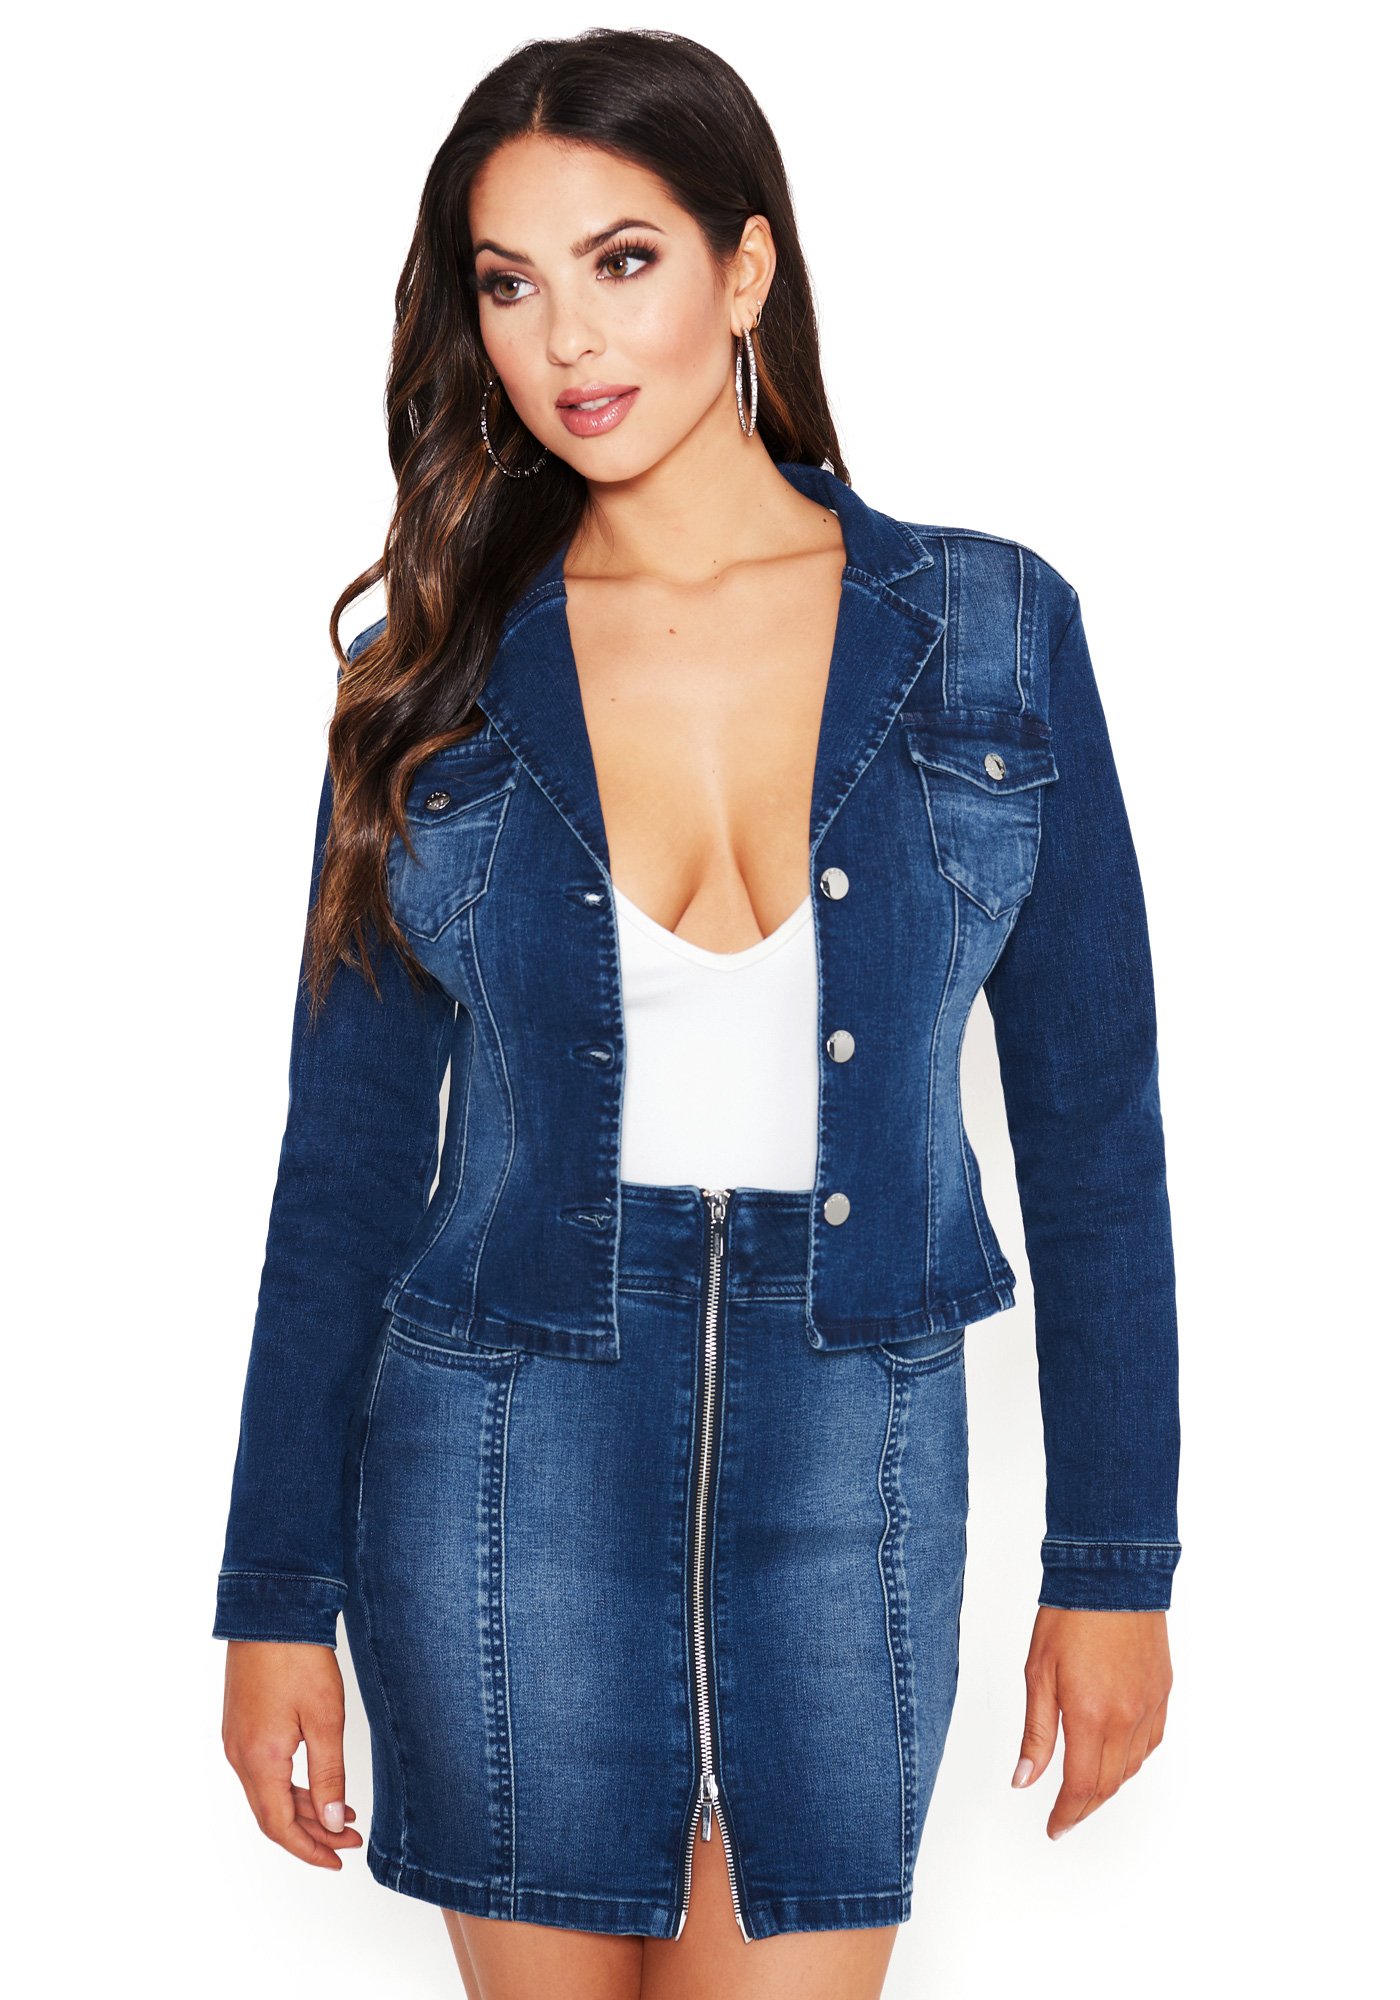 Bebe Women's Lace Back Detail Denim Jacket, Size XS in MED BLUE WASH Cotton/Spandex